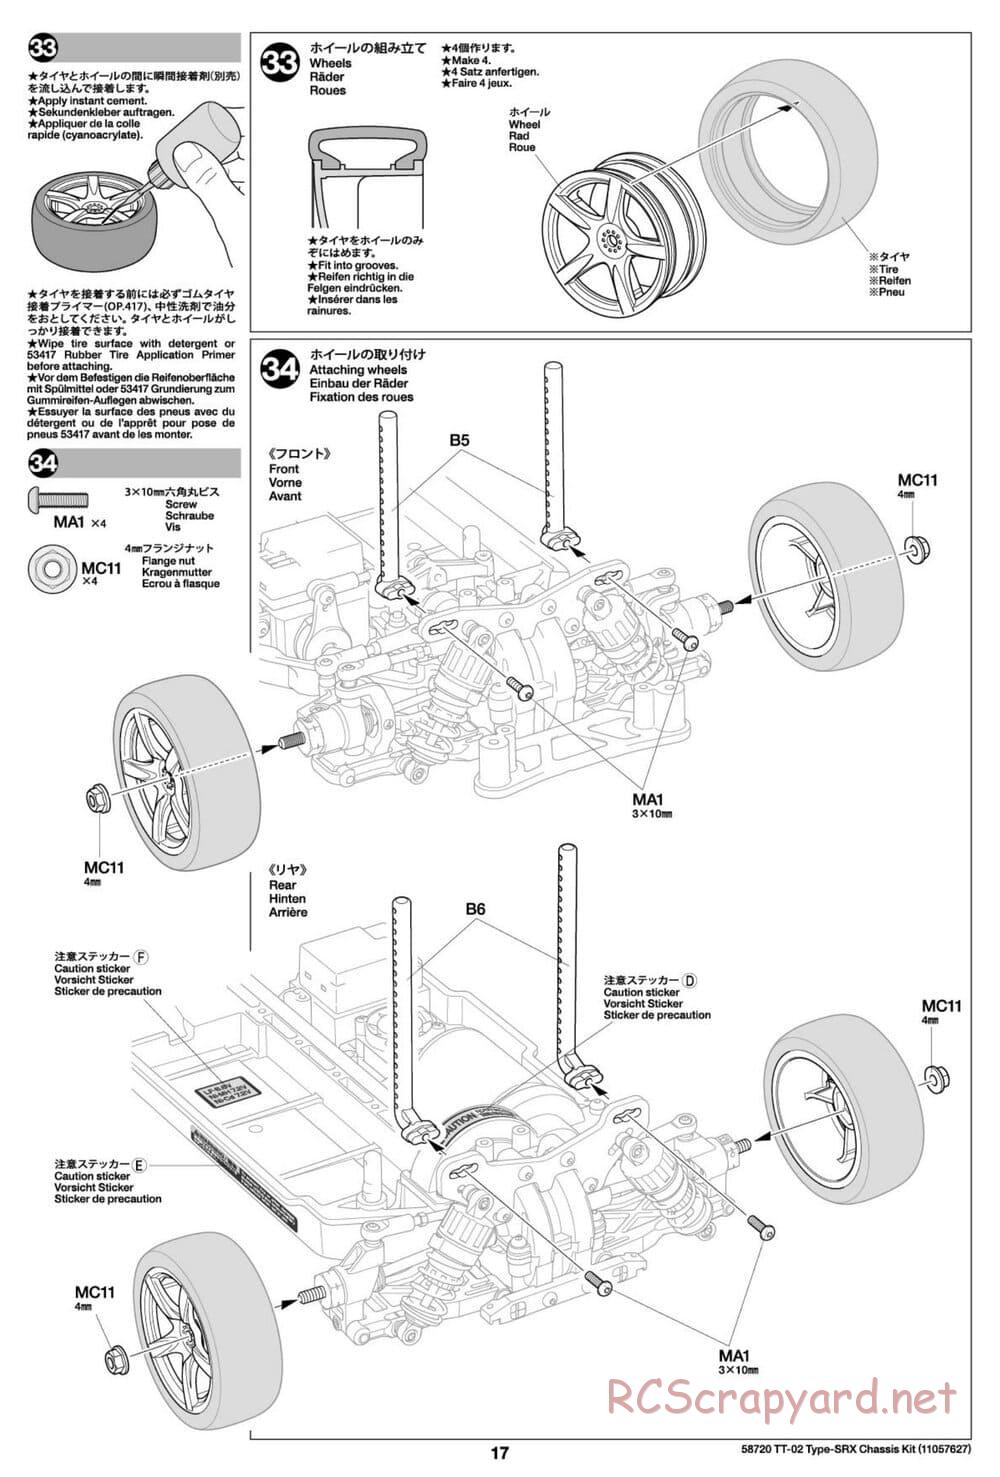 Tamiya - TT-02 Type-SRX Chassis - Manual - Page 17